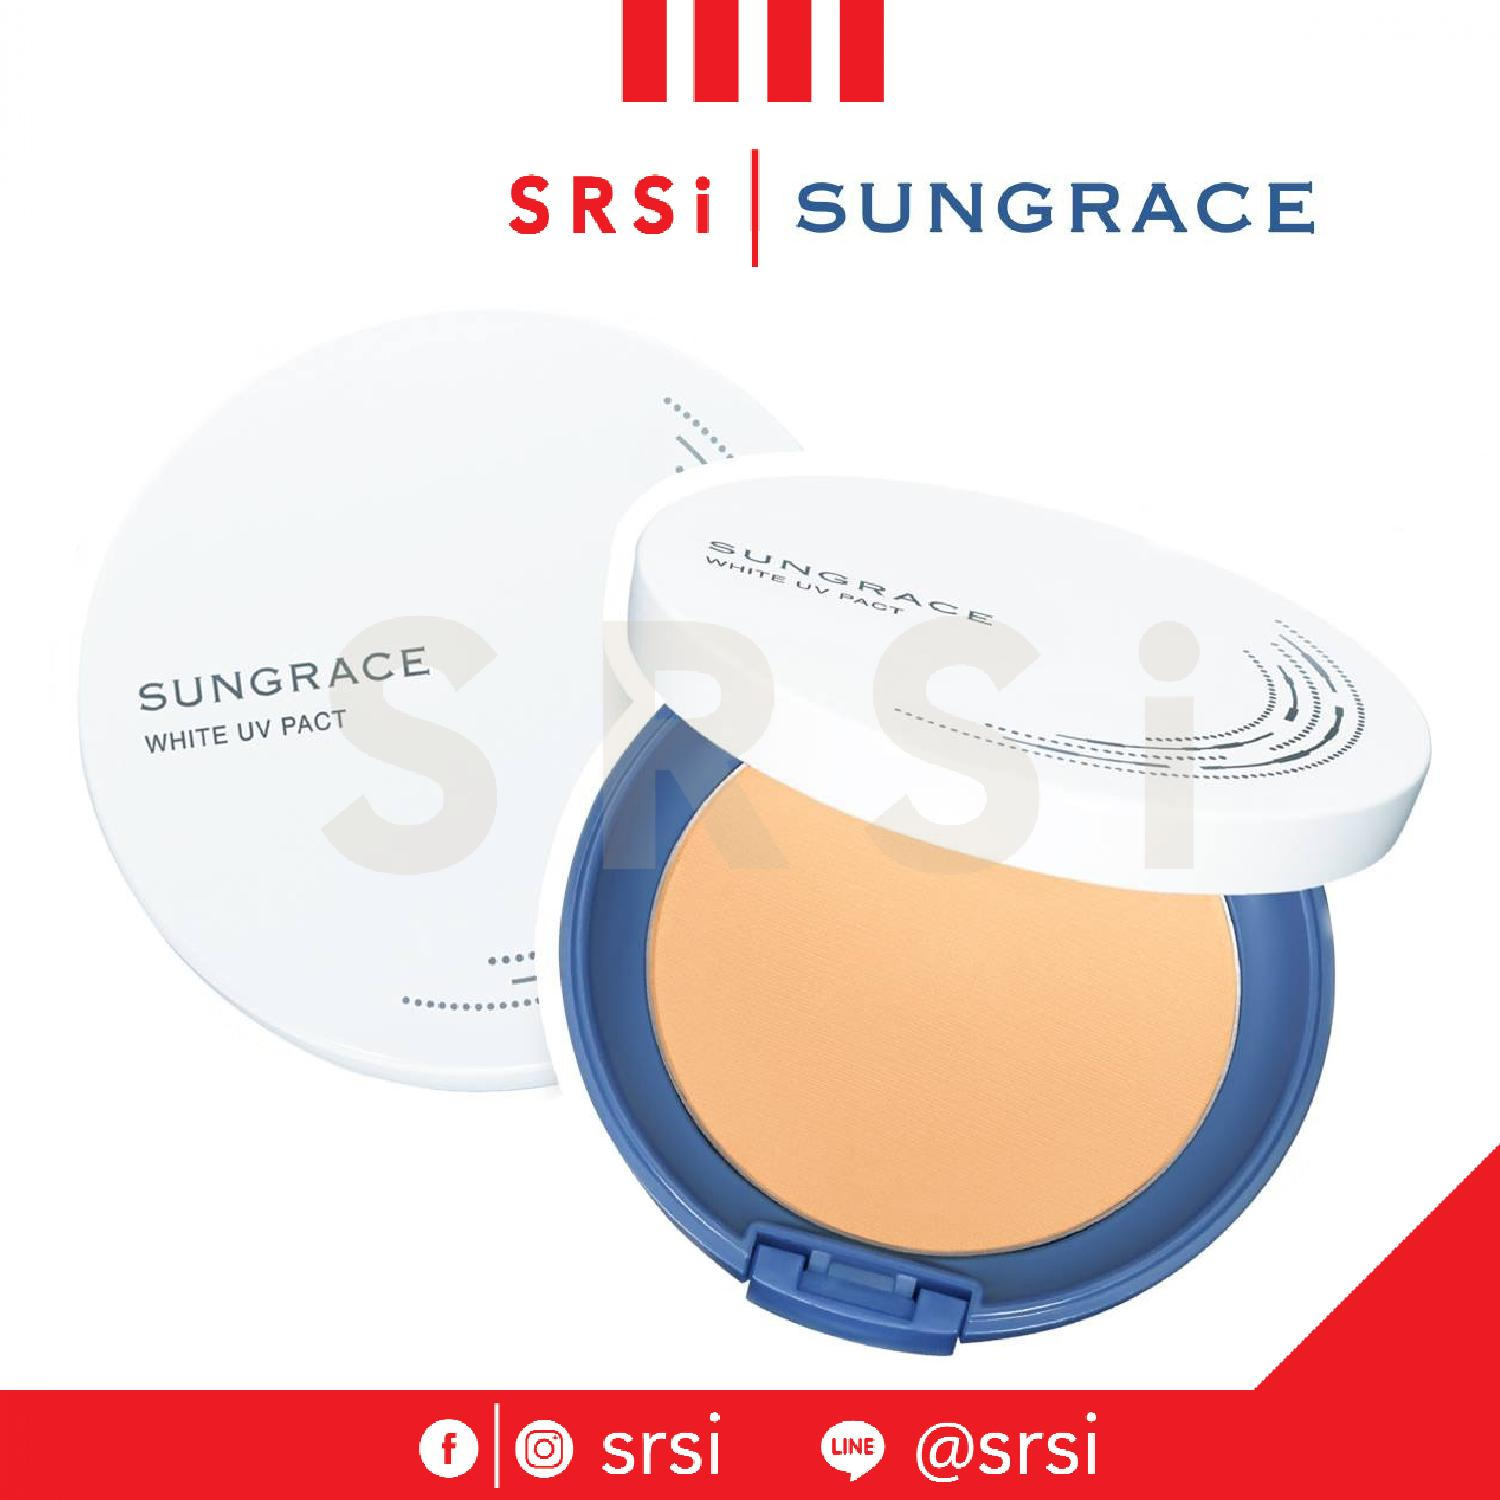 Covermark Sungrace White UV Pact N SPF18 /PA++ : คัพเวอร์มาร์ค ซันเกรซ แป้ง ยูวี x 1 ชิ้น @SRSi